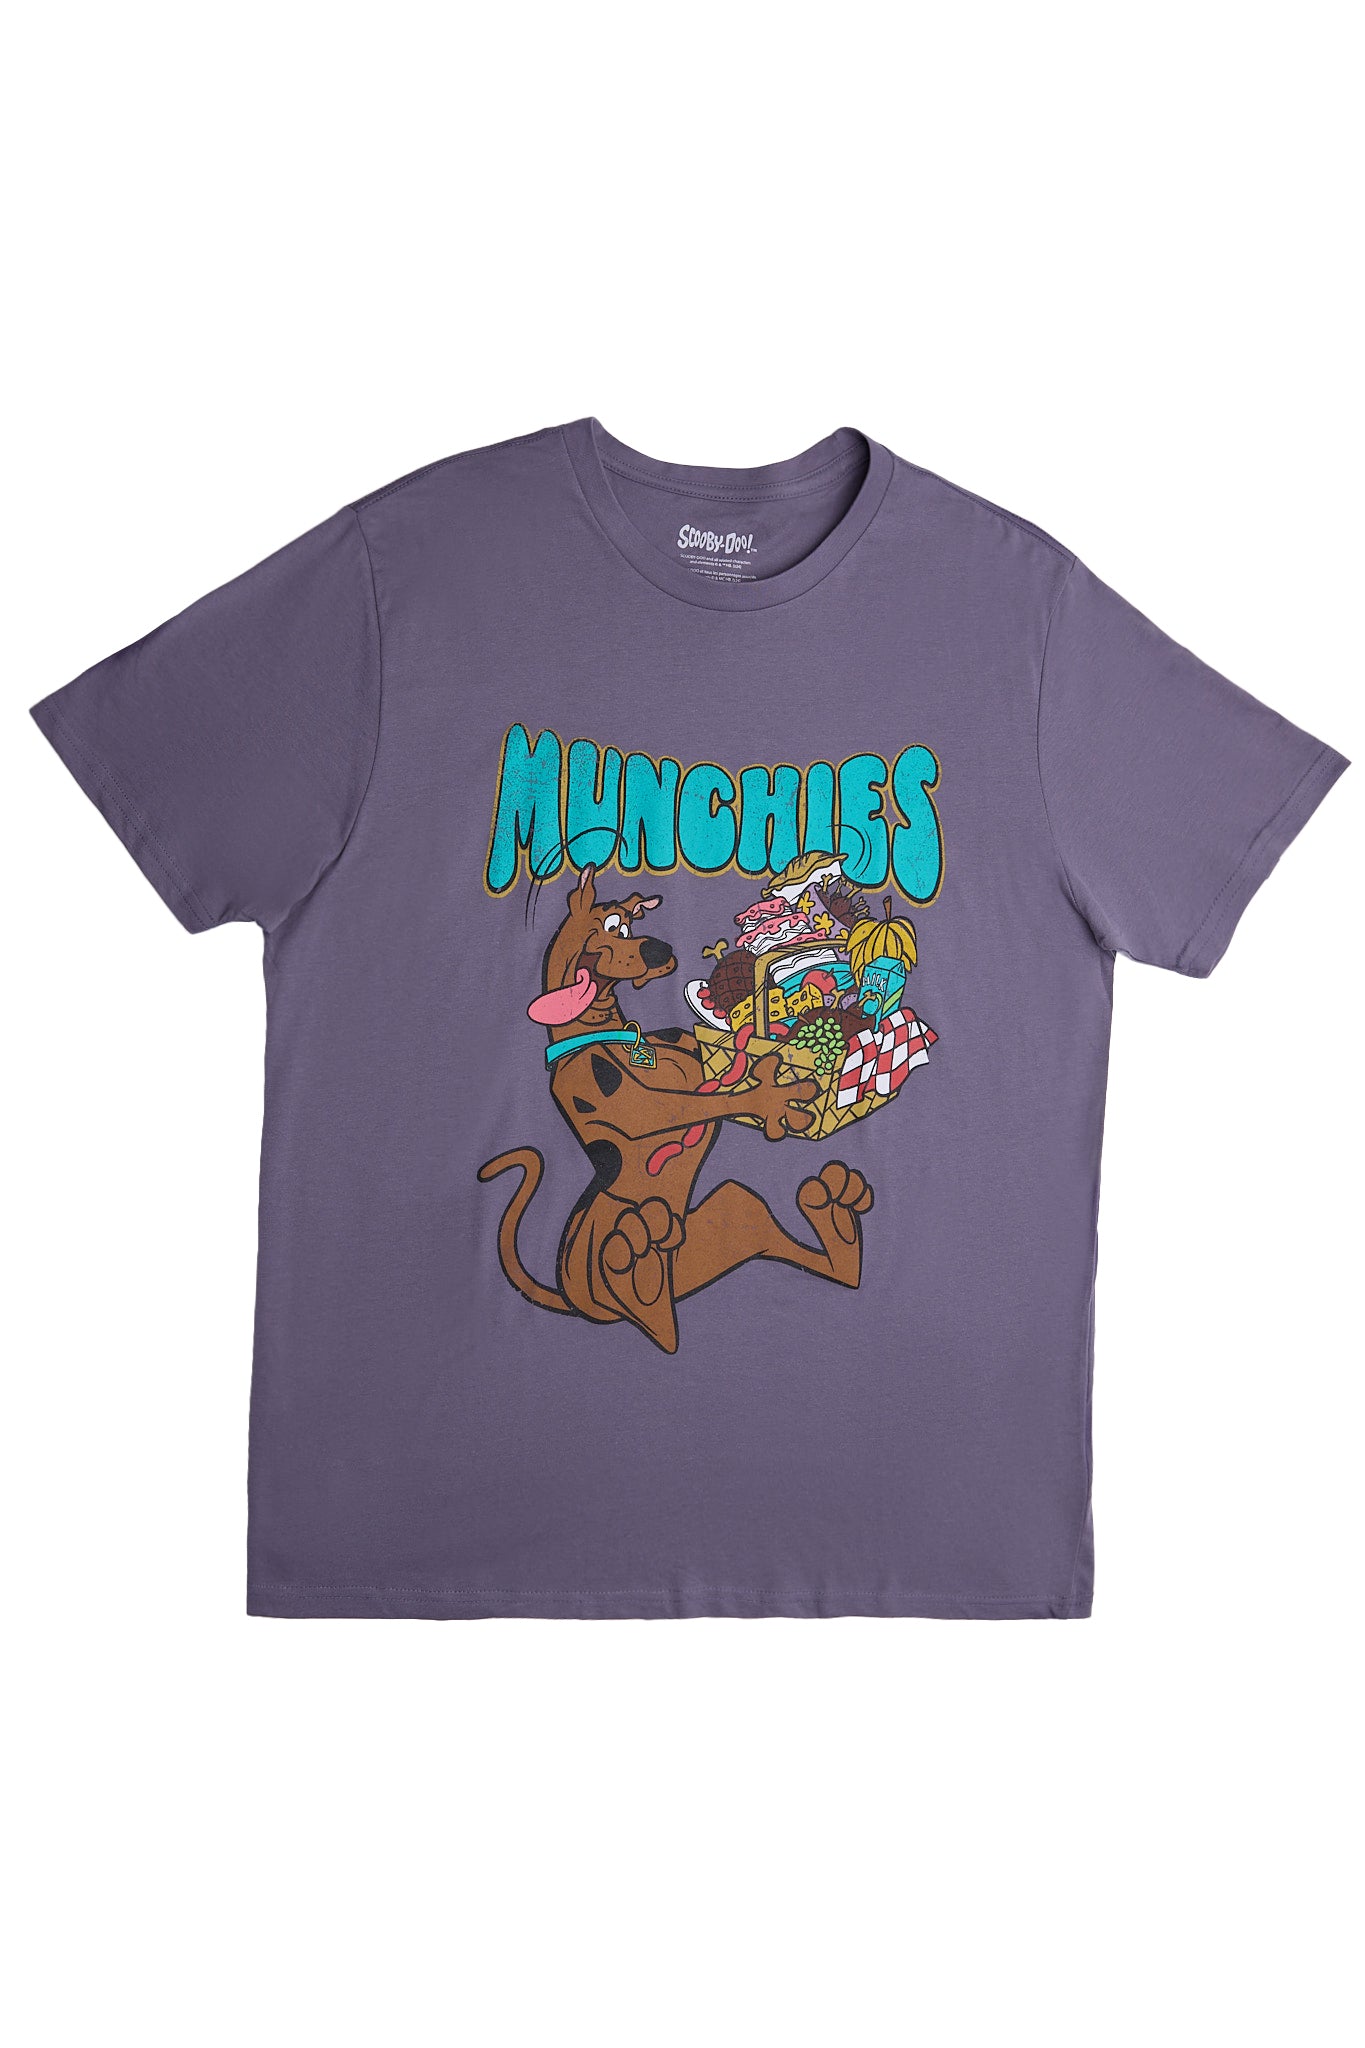 Scooby-Doo Munchies Graphic Tee